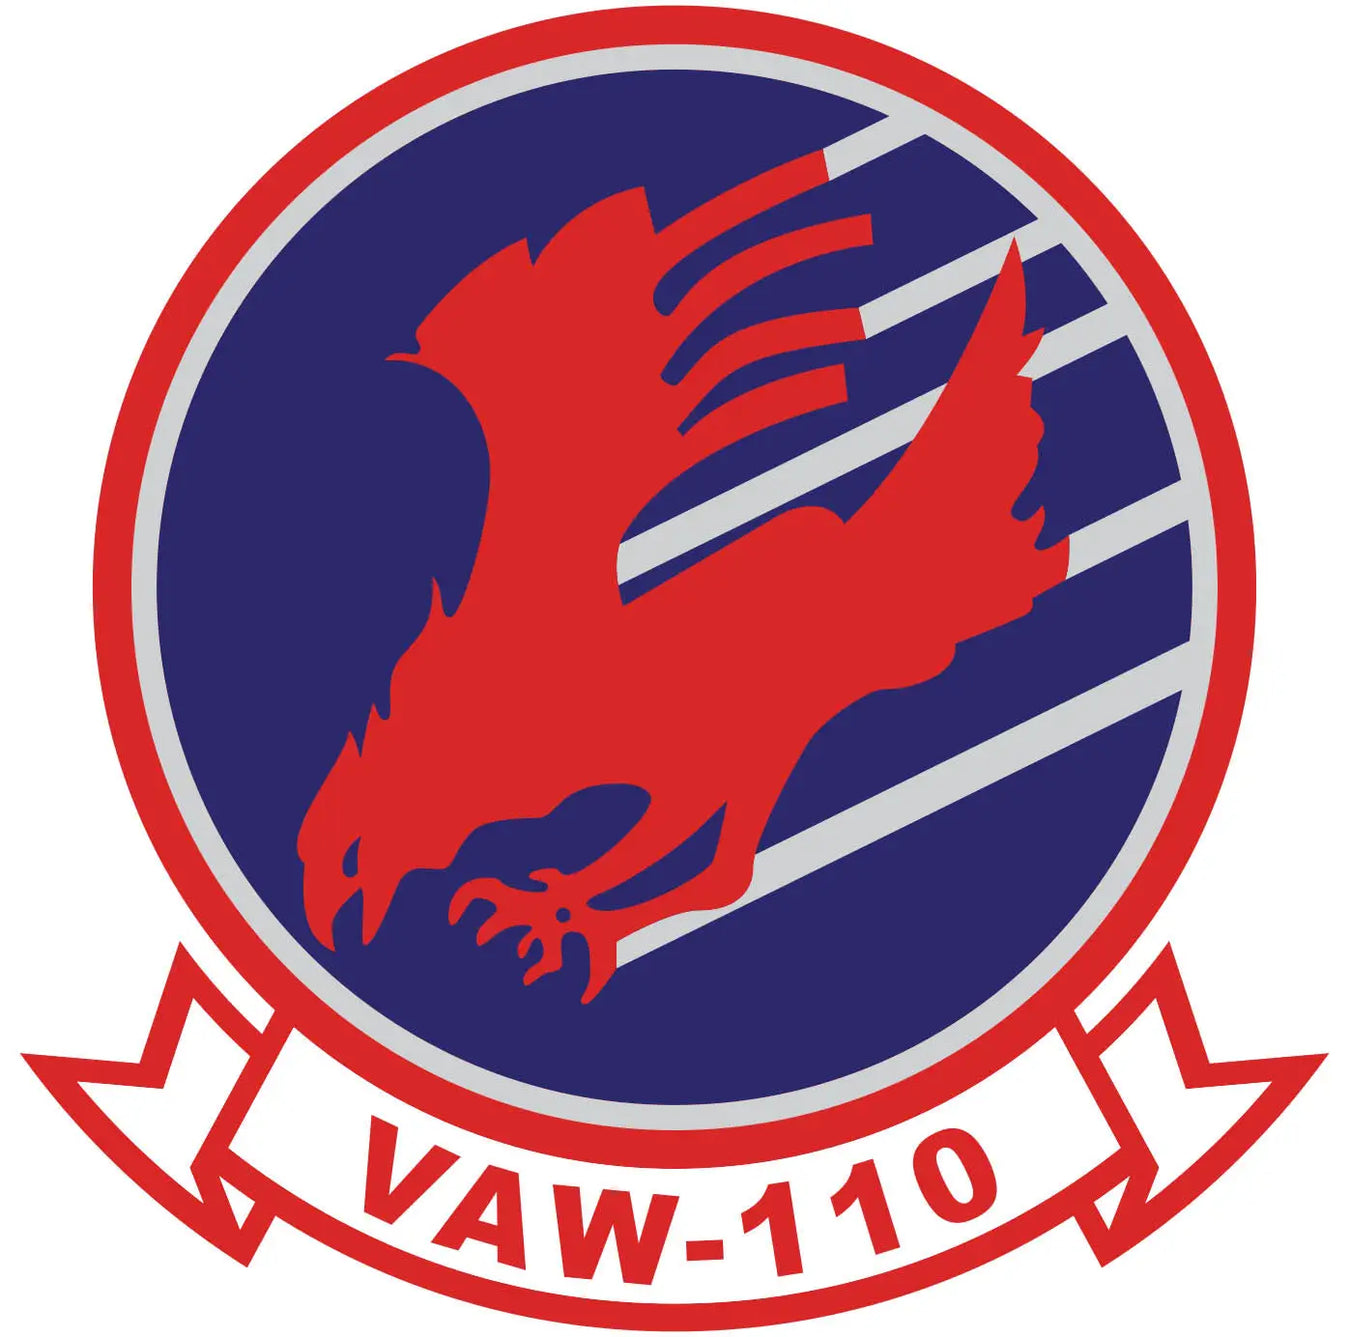 Airborne Command & Control Squadron 113 (VAW-113)